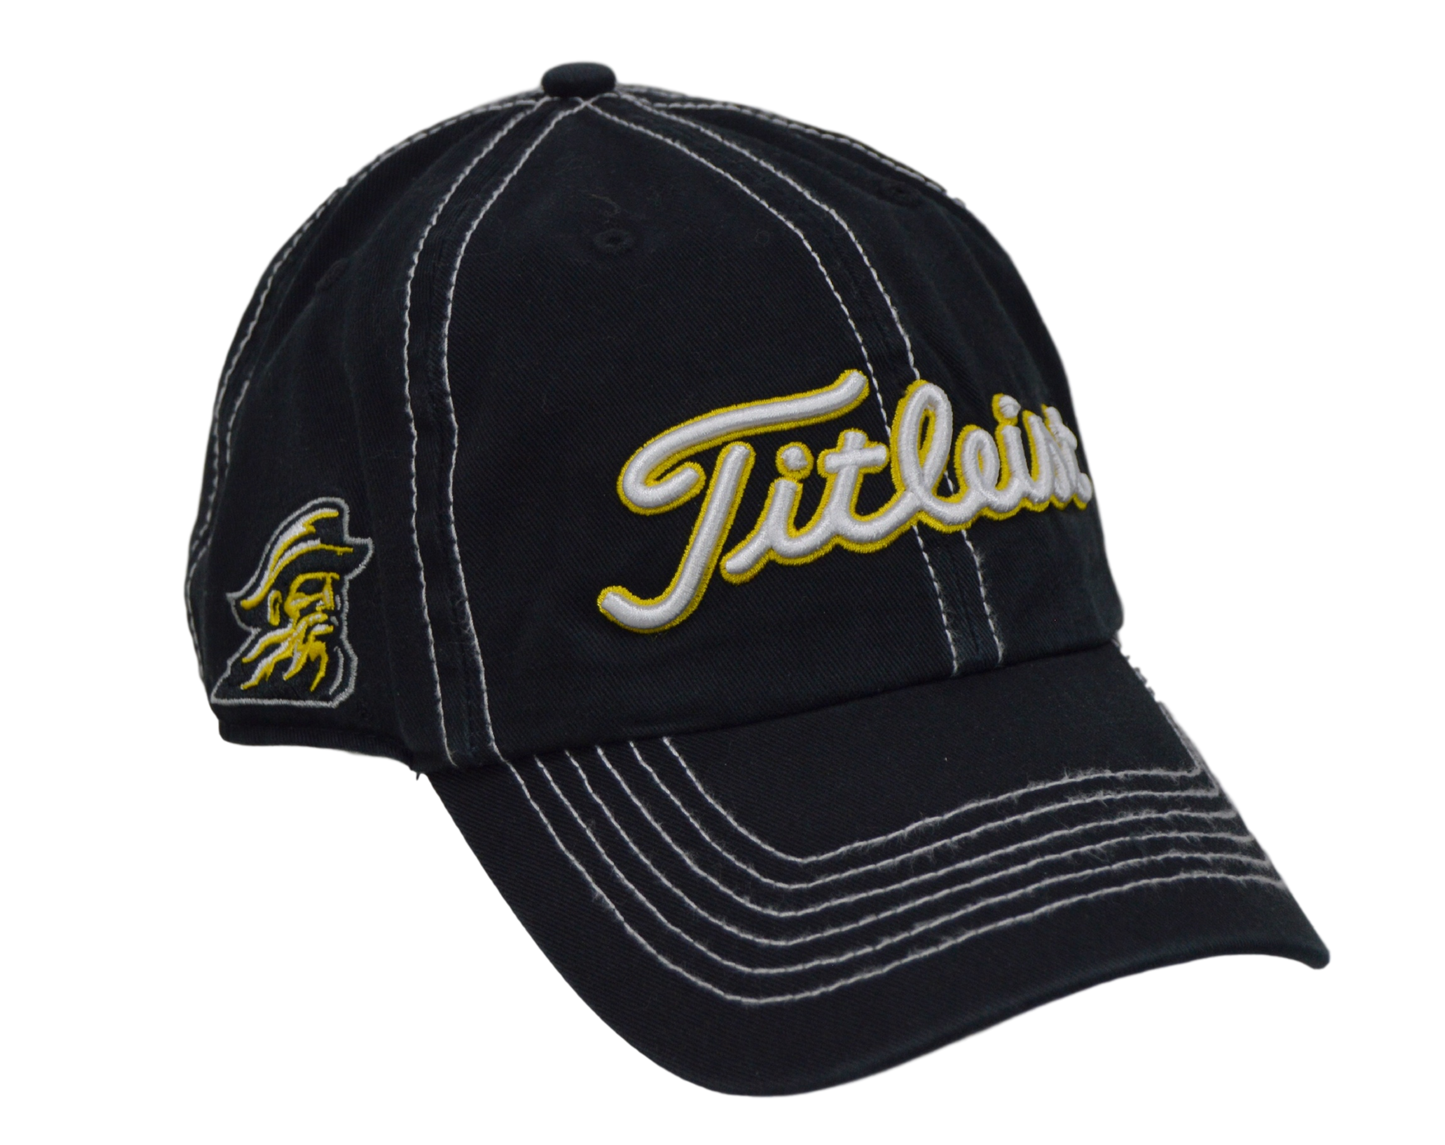 Titleist Golf Hat - Appalachian State 3 logo - Black/Adjustable